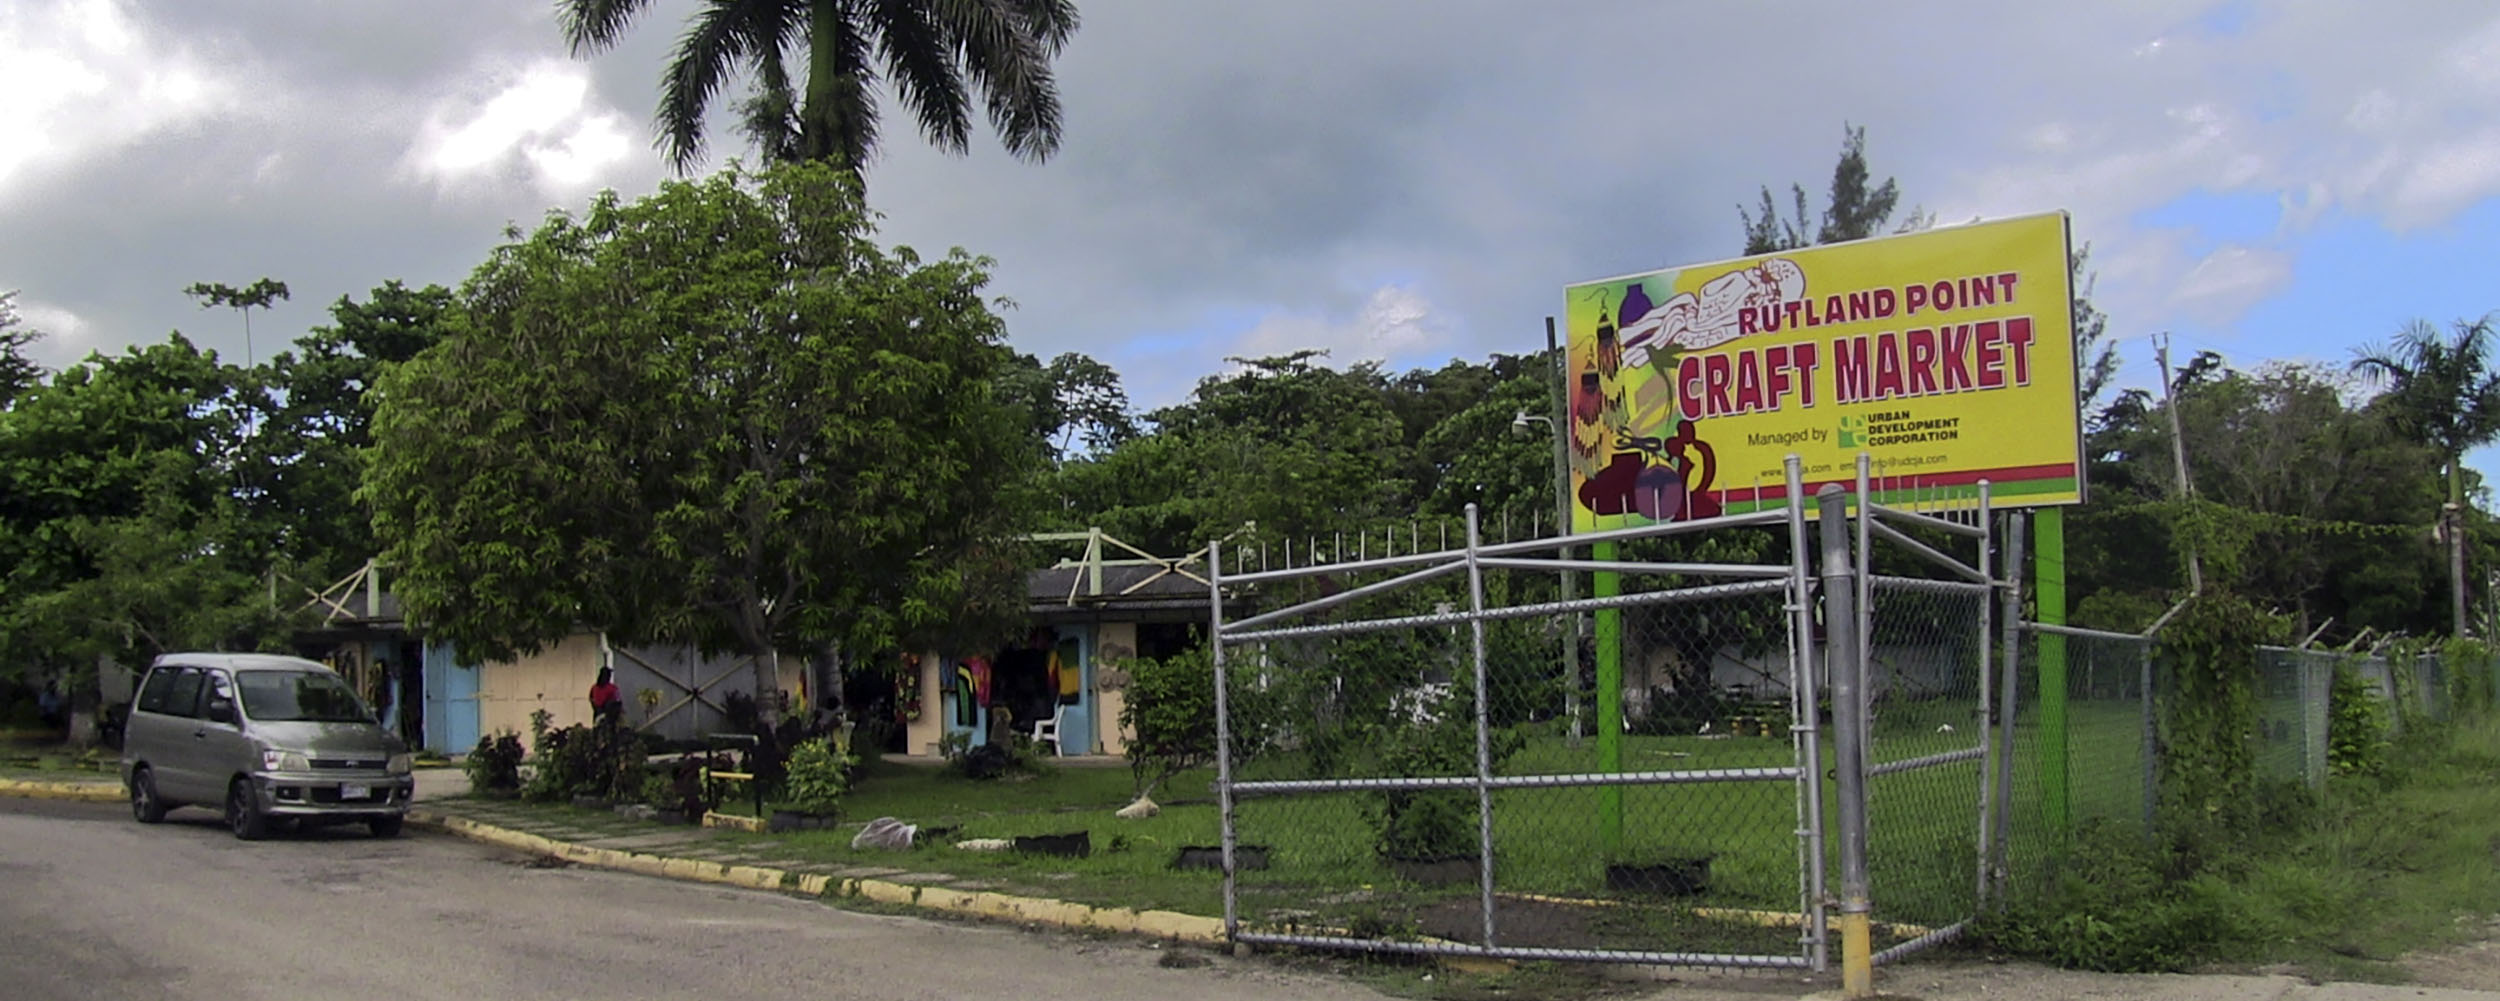 Rutland Point Craft Market - Norman Manley Boulevard - Negril Jamaica